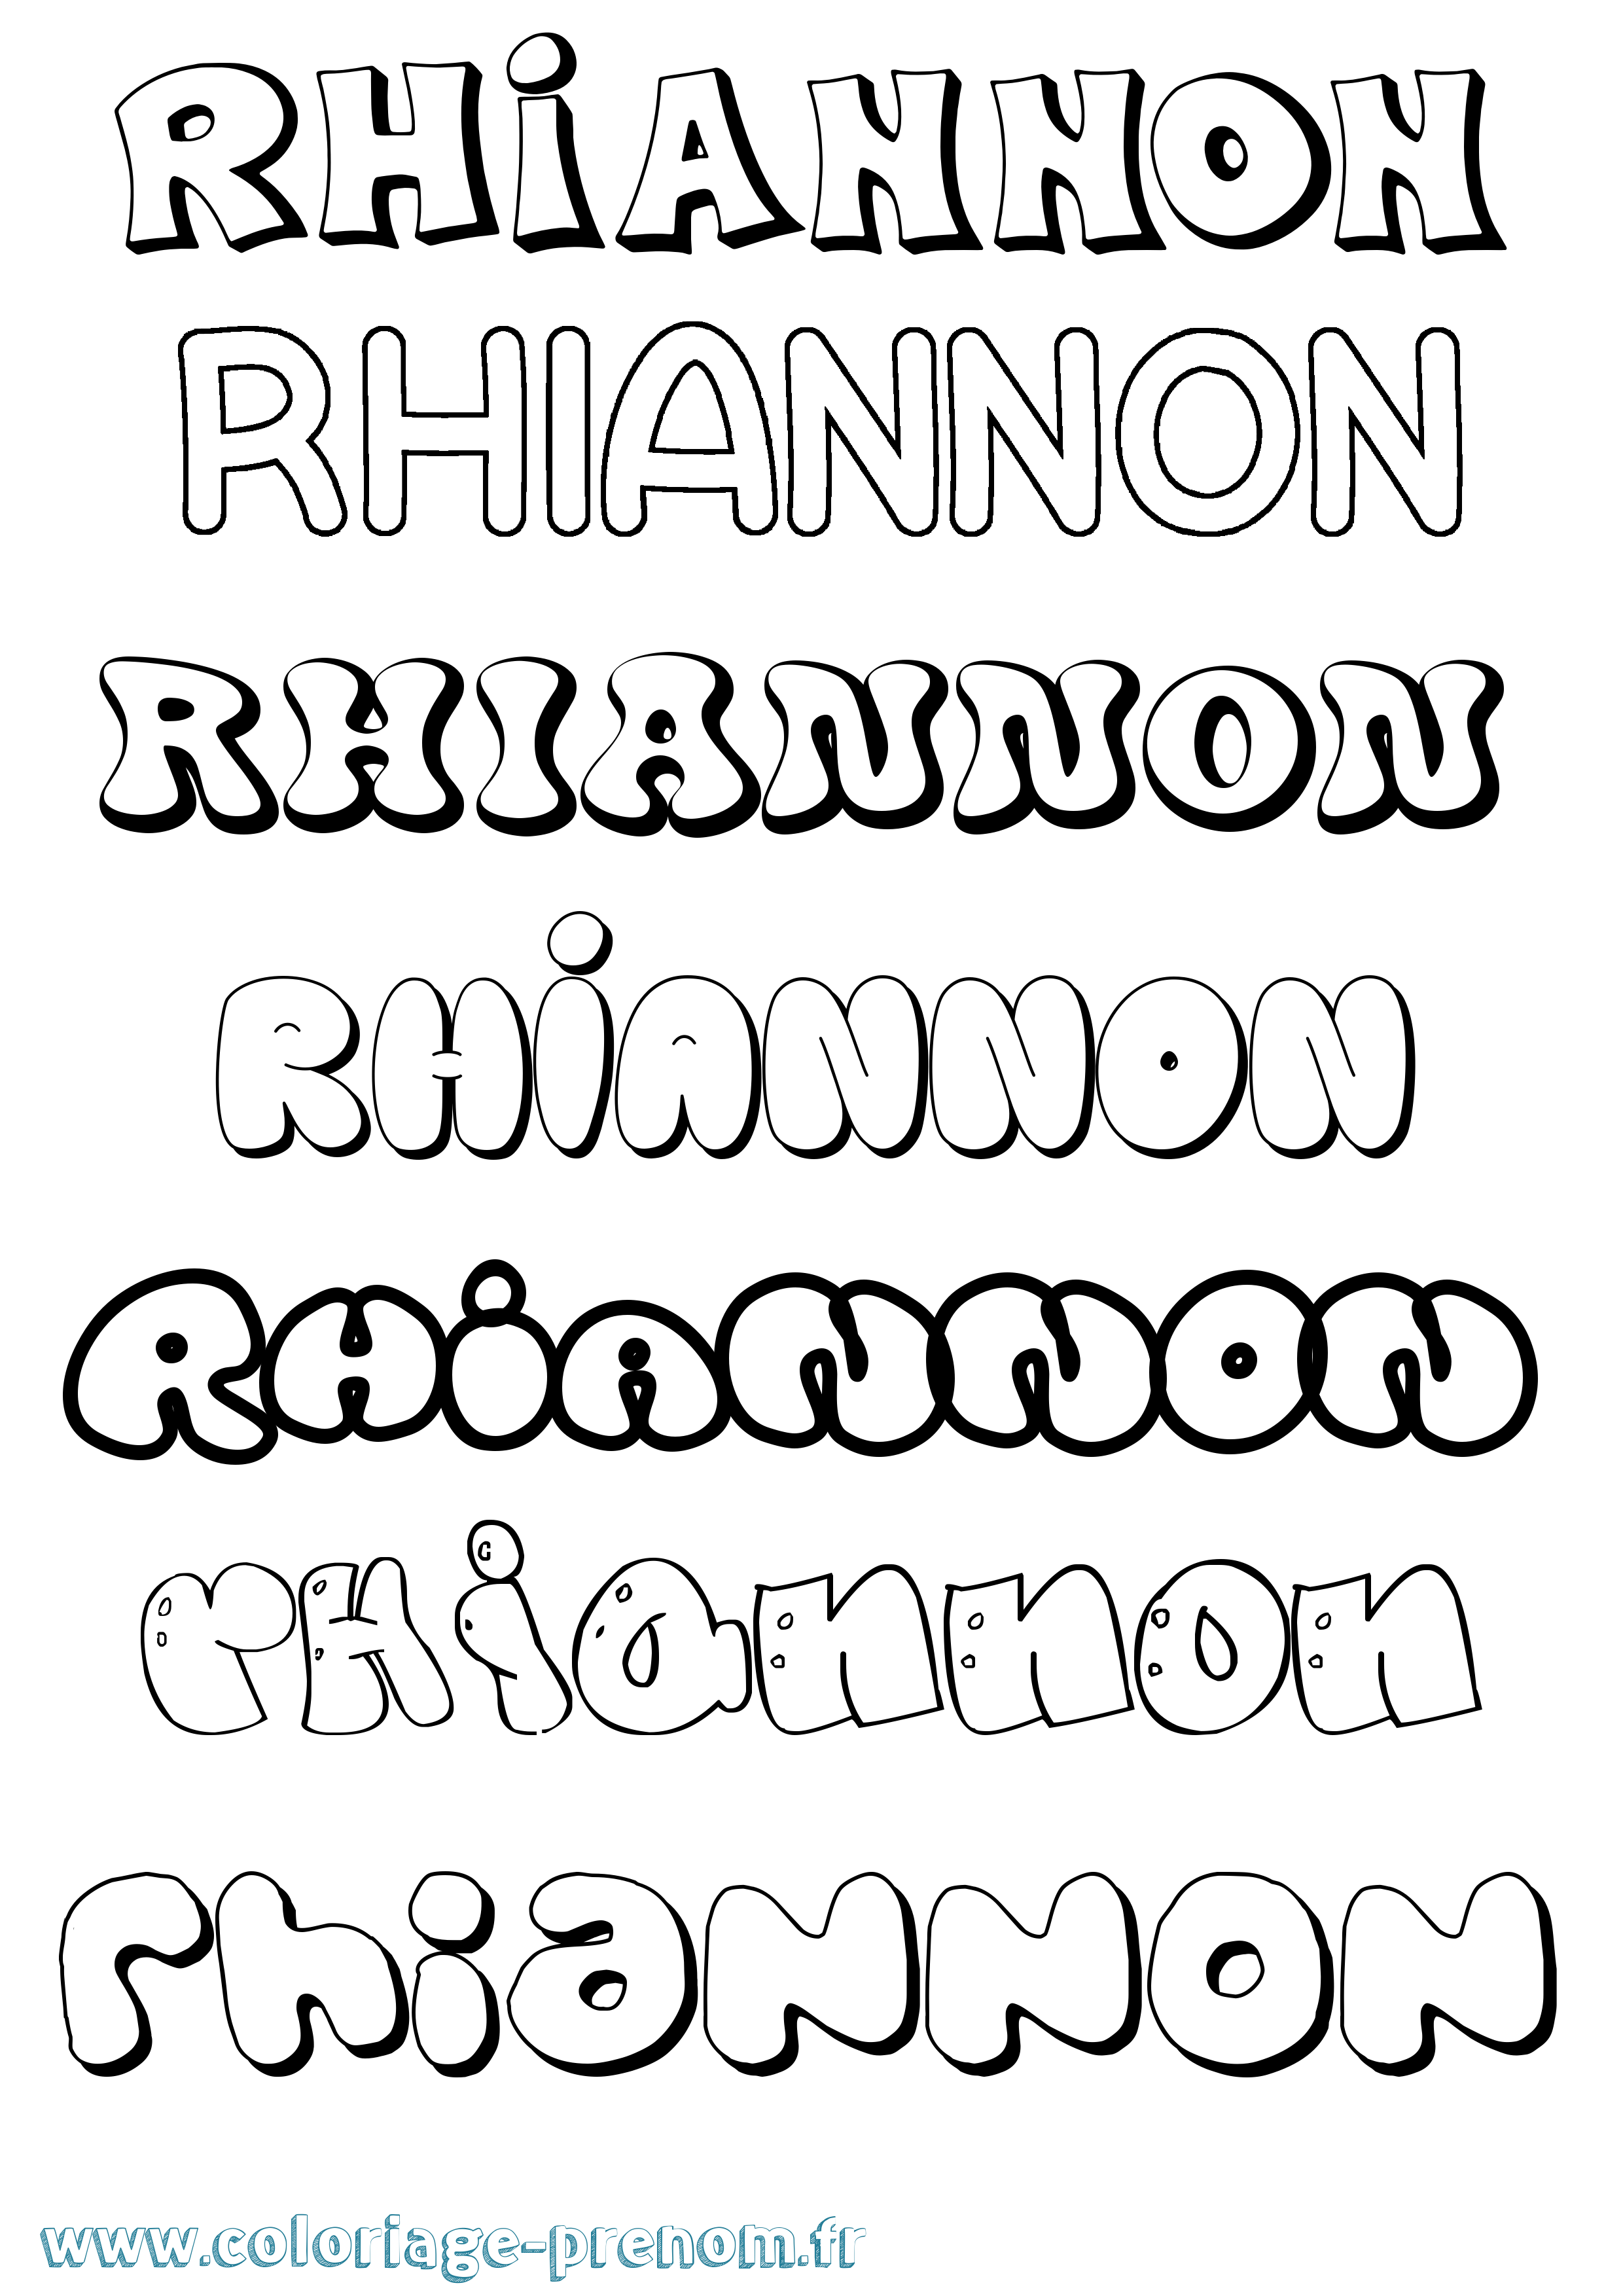 Coloriage prénom Rhiannon Bubble